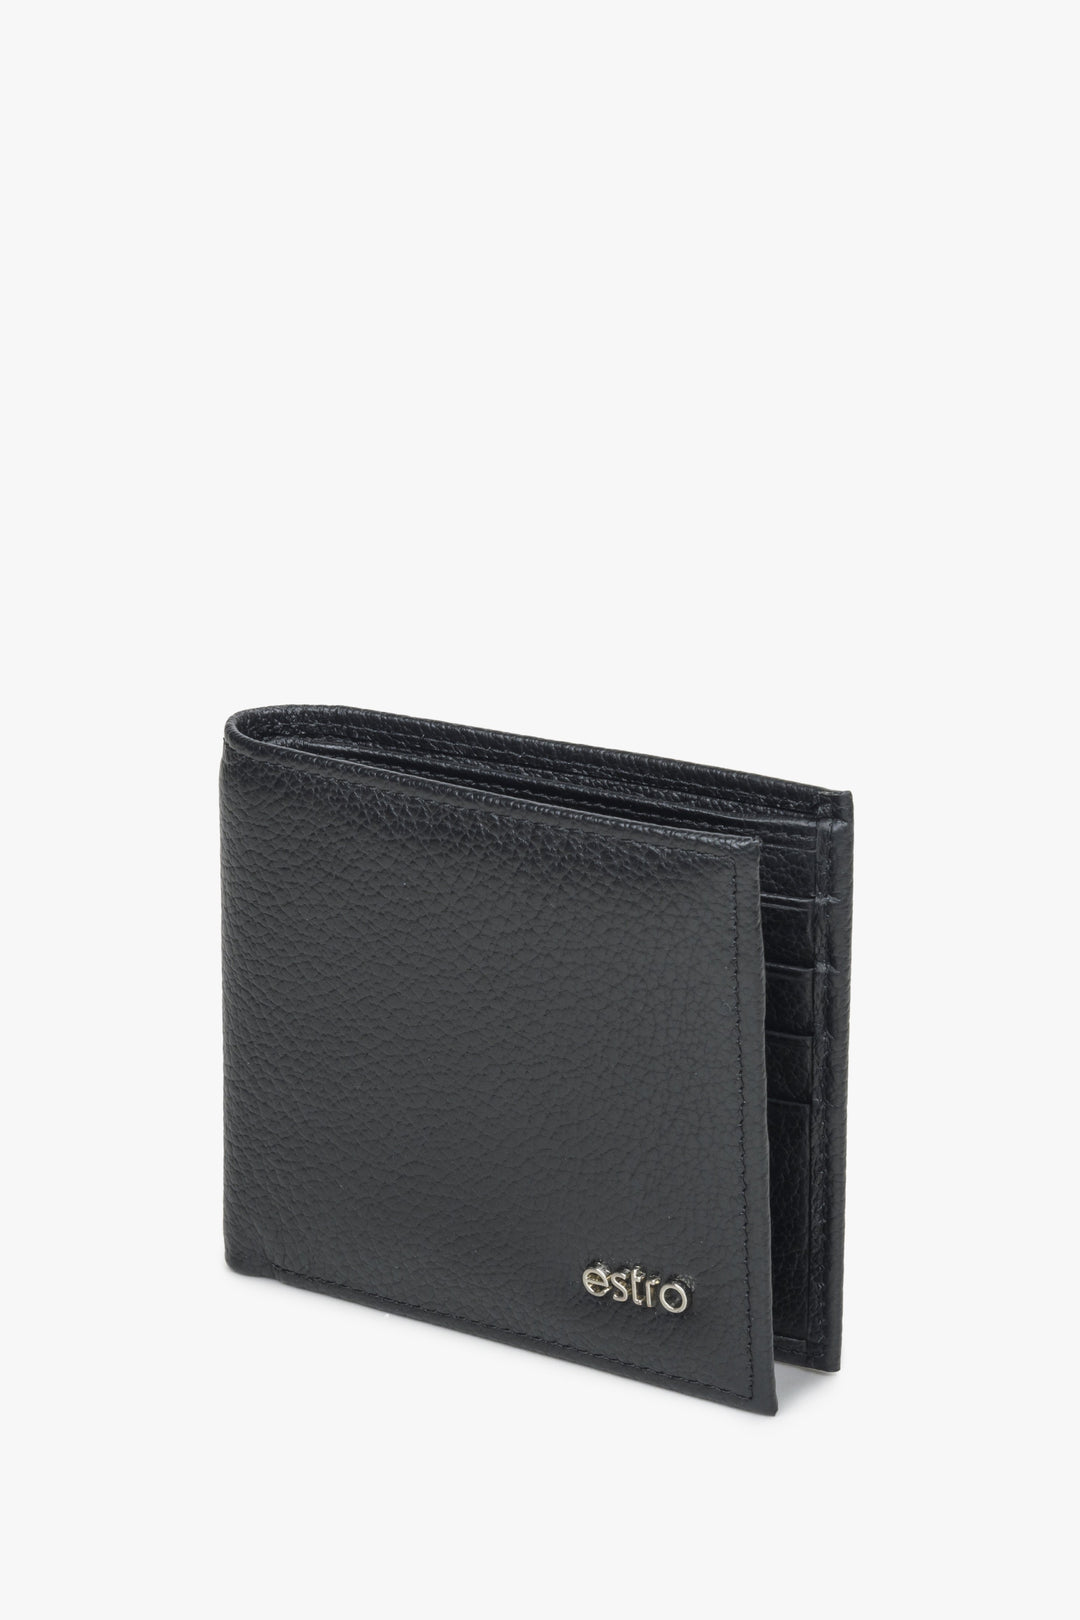 Compact men's black Estro wallet made of genuine leather.